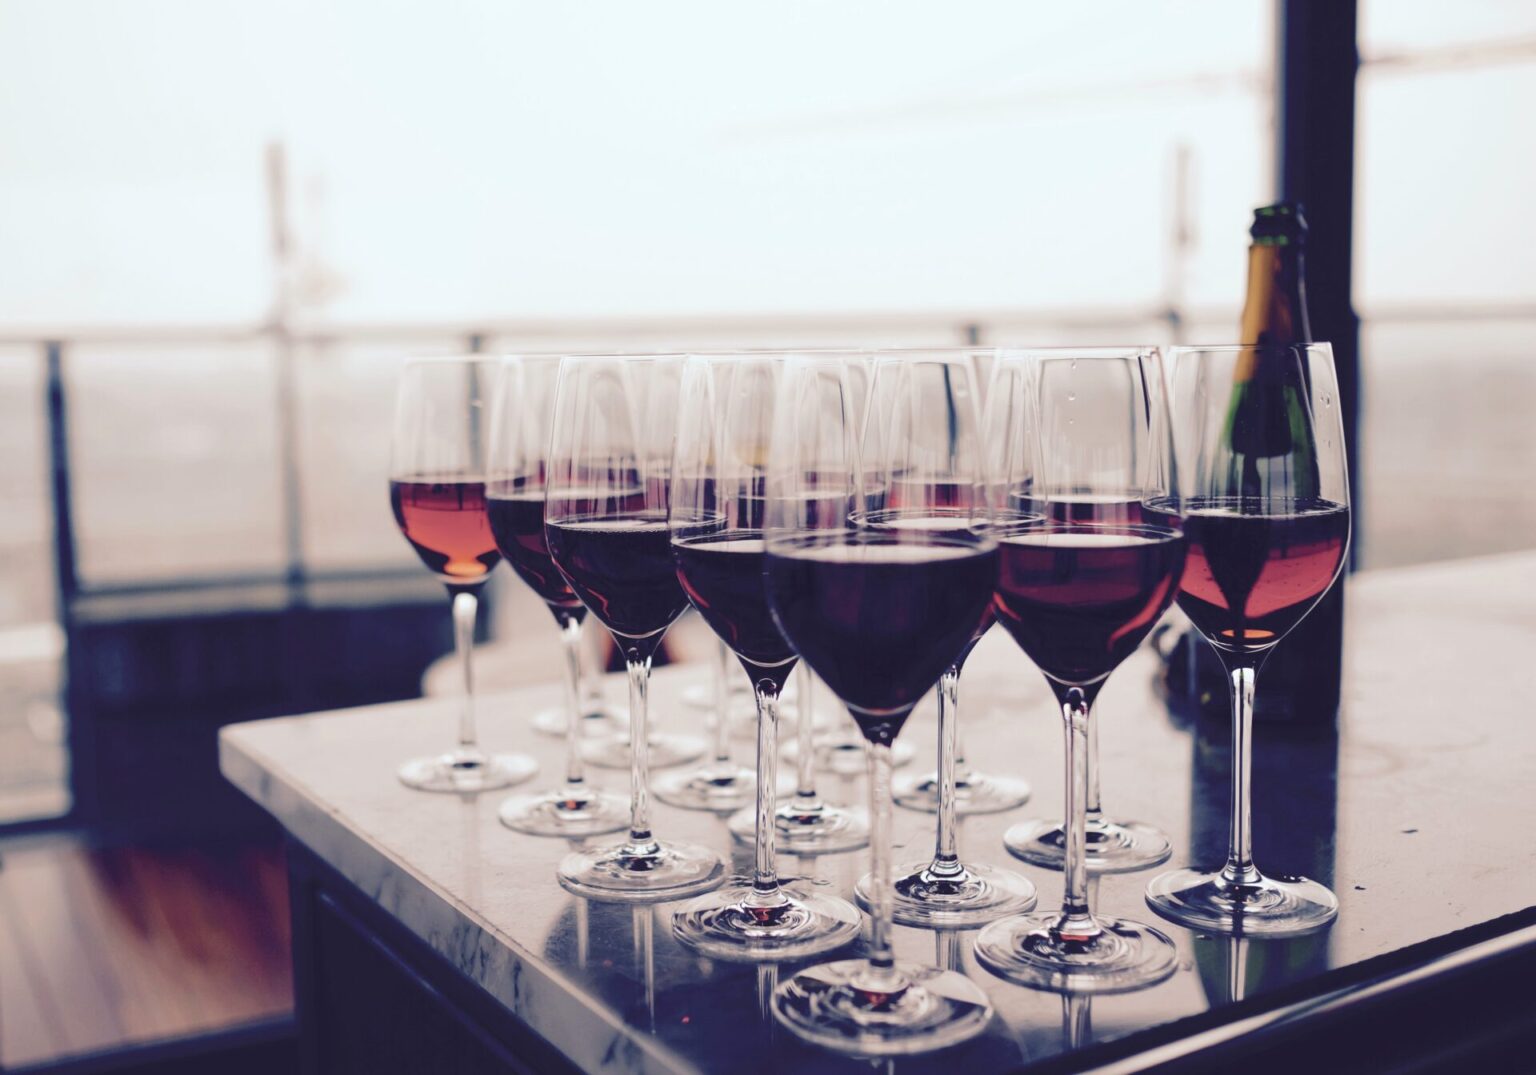 Wine glasses arranged for a tasting